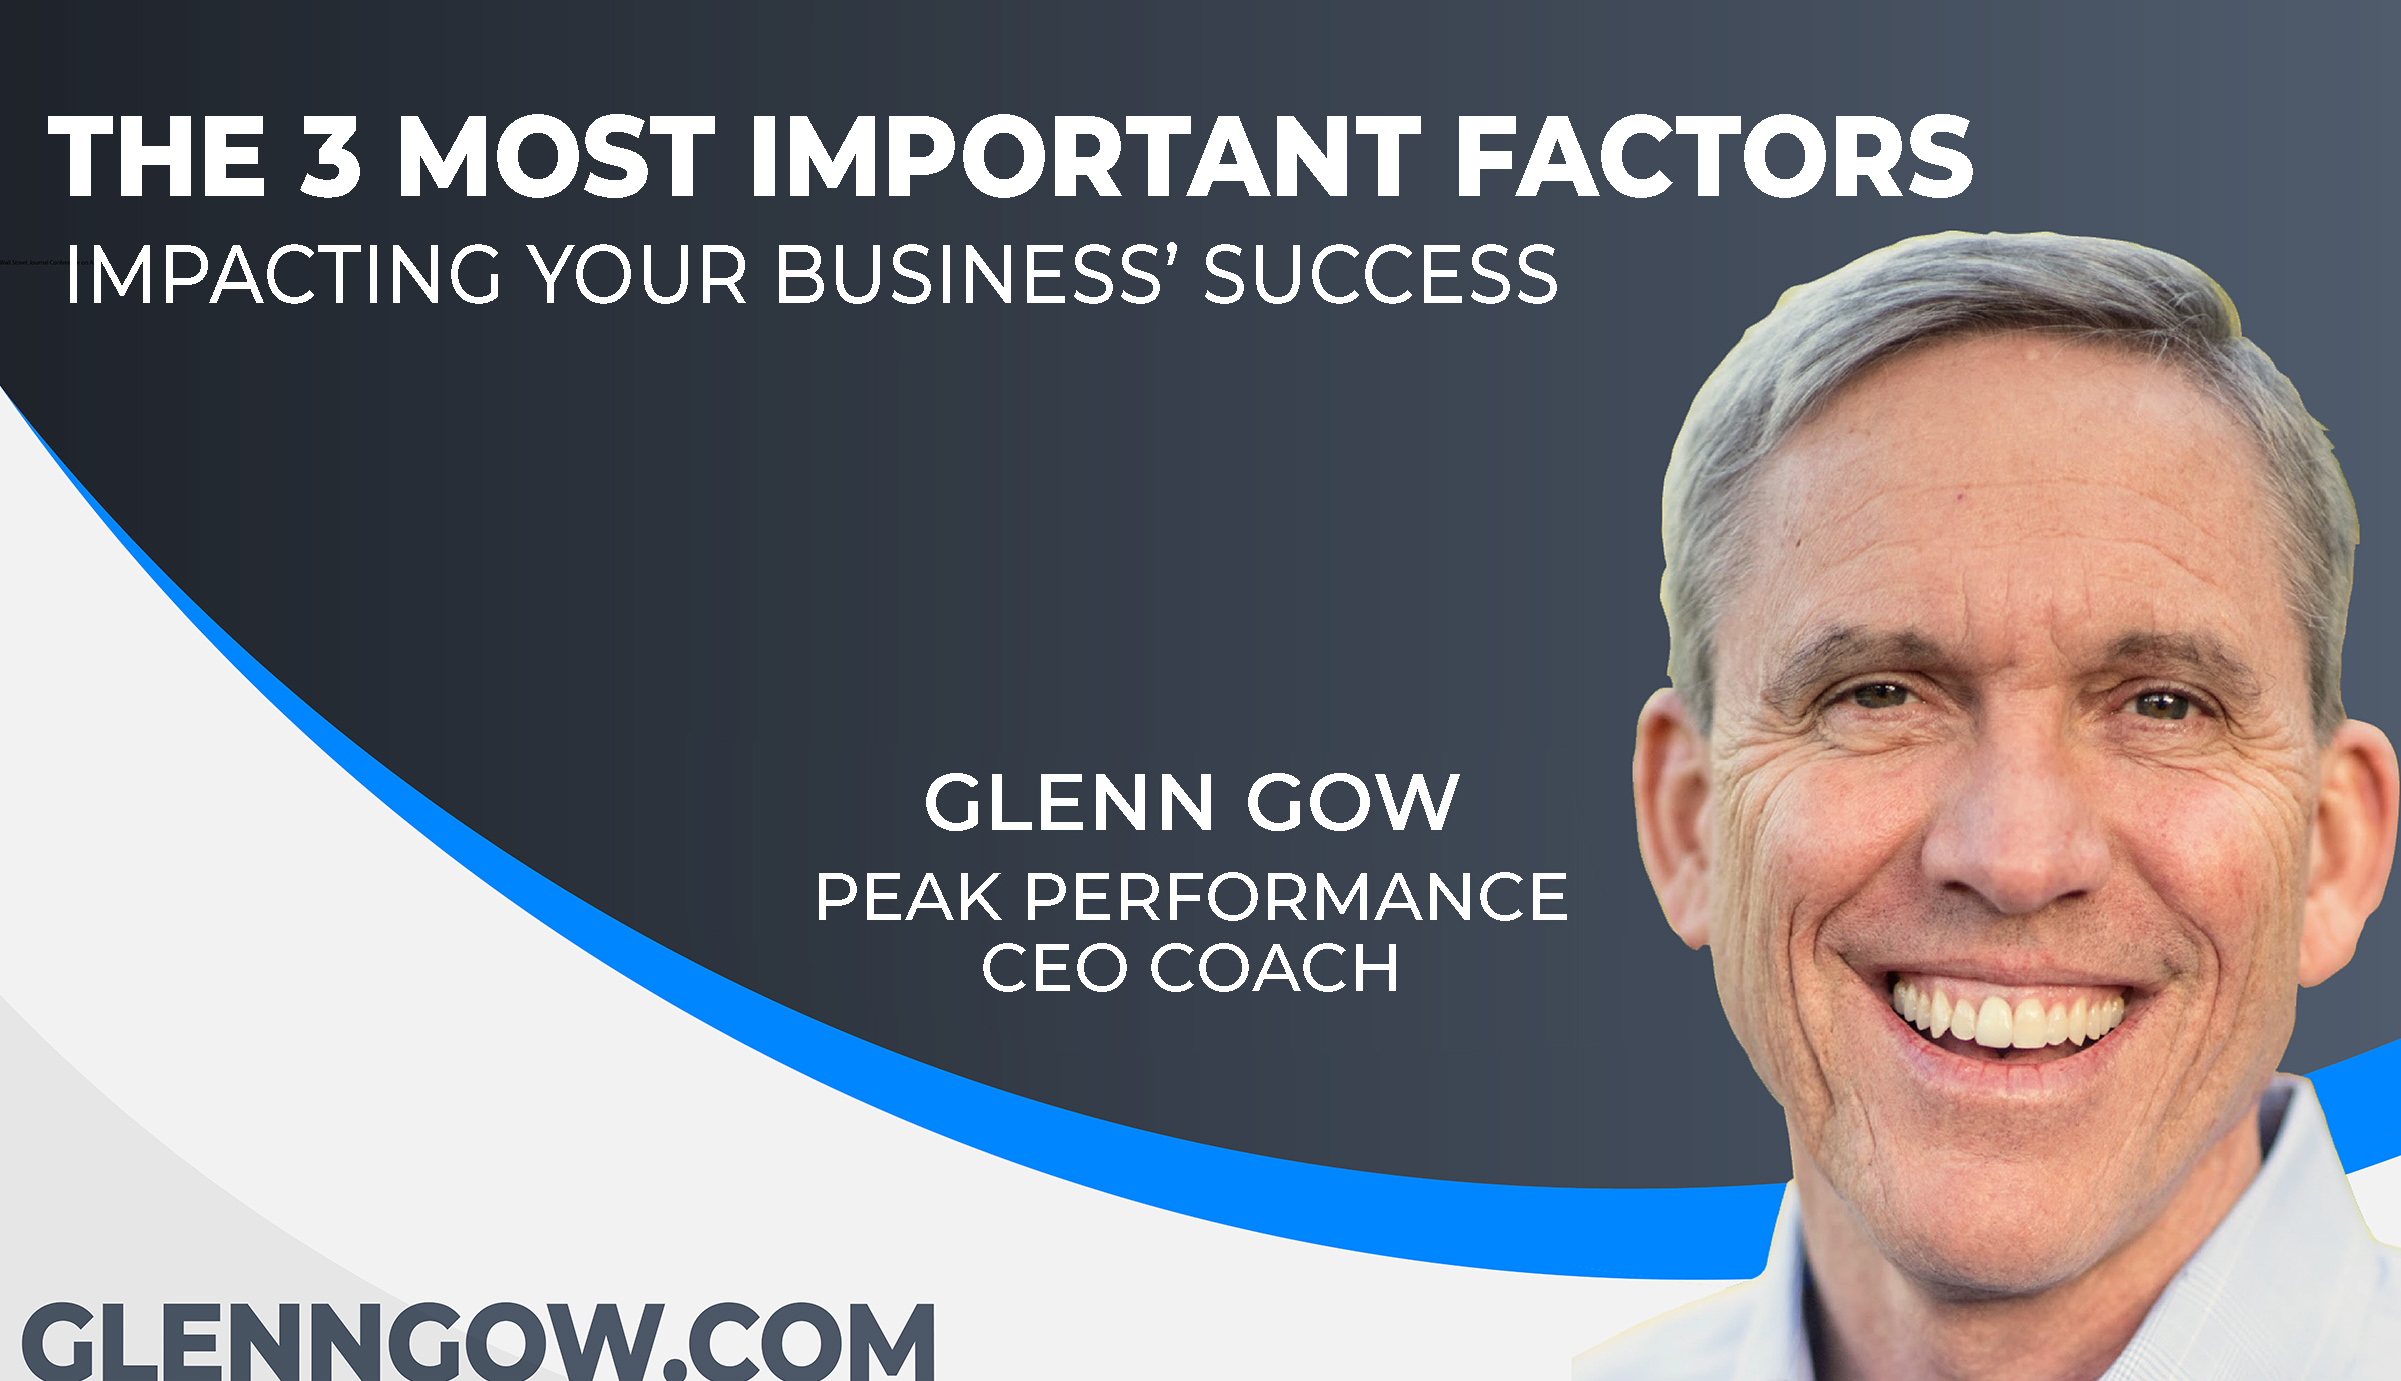 Glenn Gow Thumbnail 3 Most Important Factors Impacting Business Success